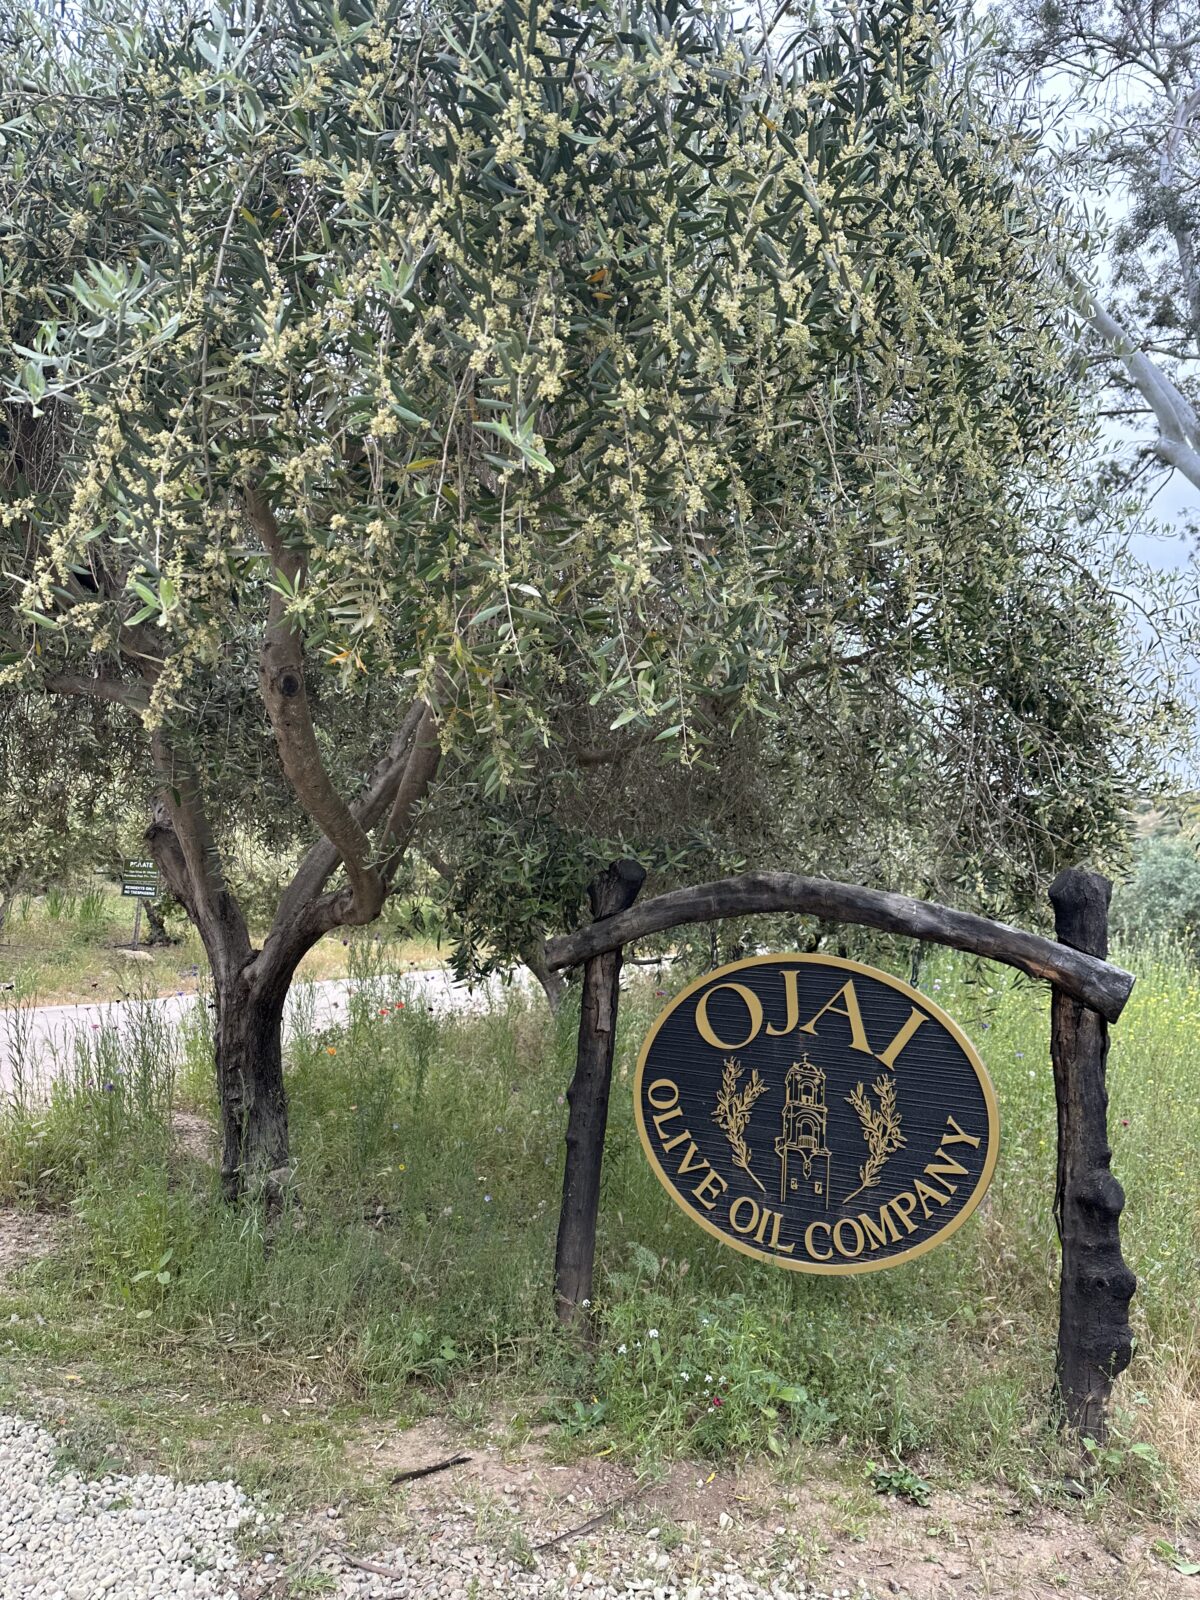 Ojai olive oil company